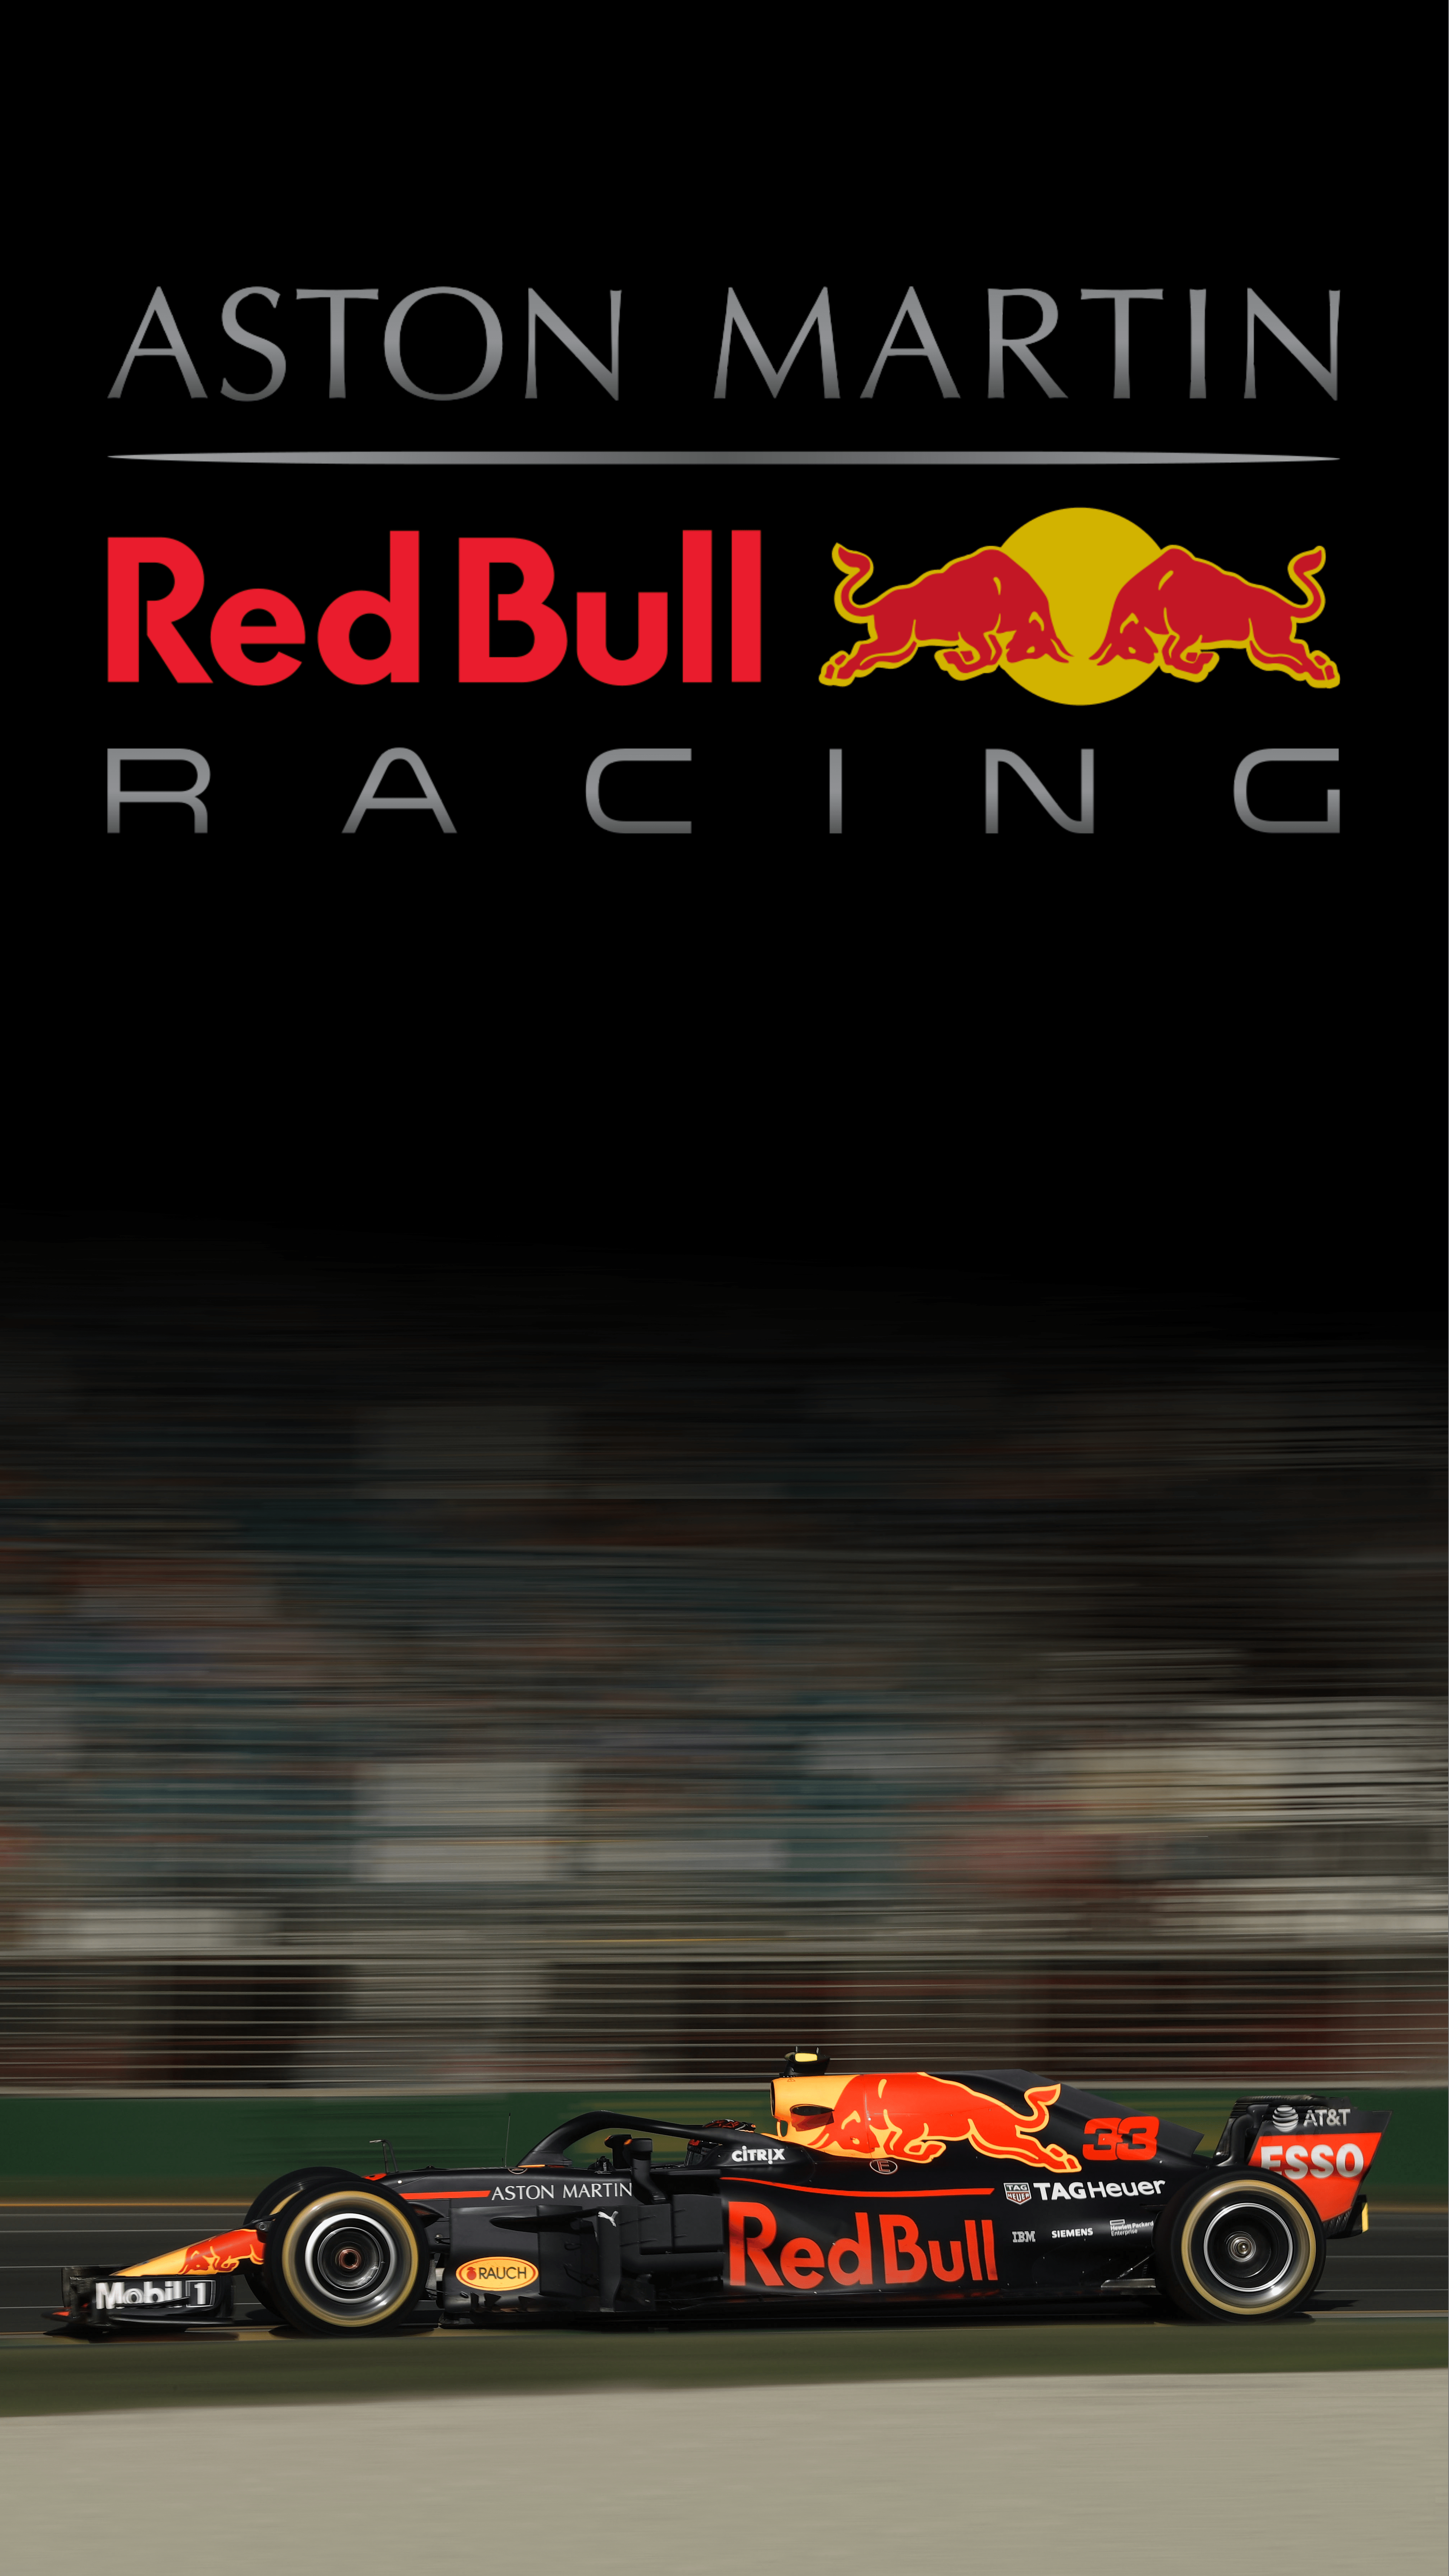 Aston Martin Red Bull Racing Wallpapers Top Free Aston Martin Red Bull Racing Backgrounds Wallpaperaccess